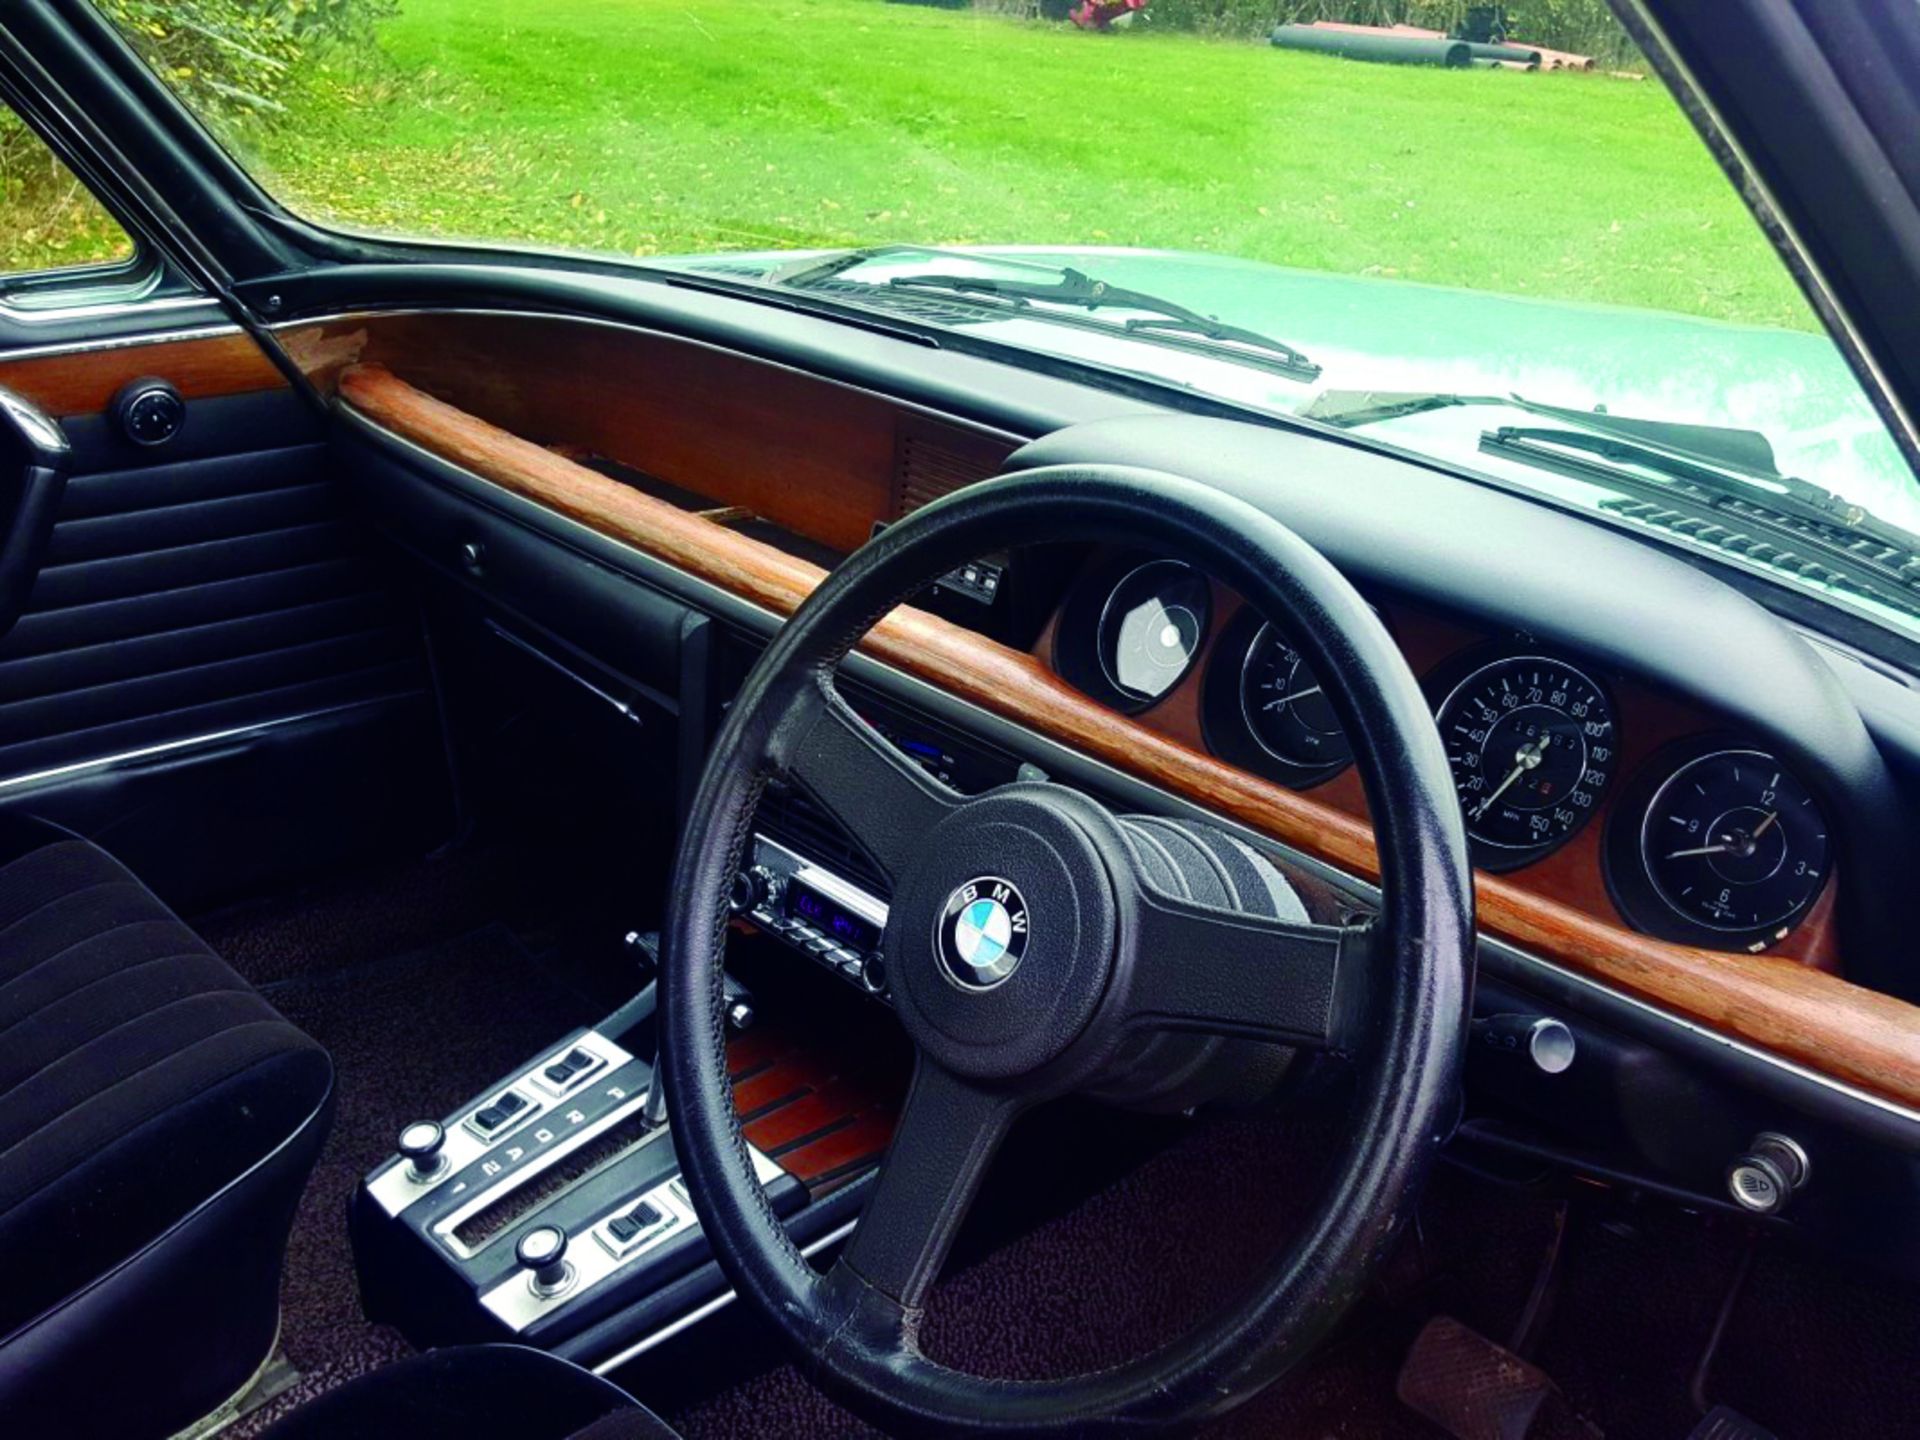 BMW 3.0CS 1975 - Image 7 of 11